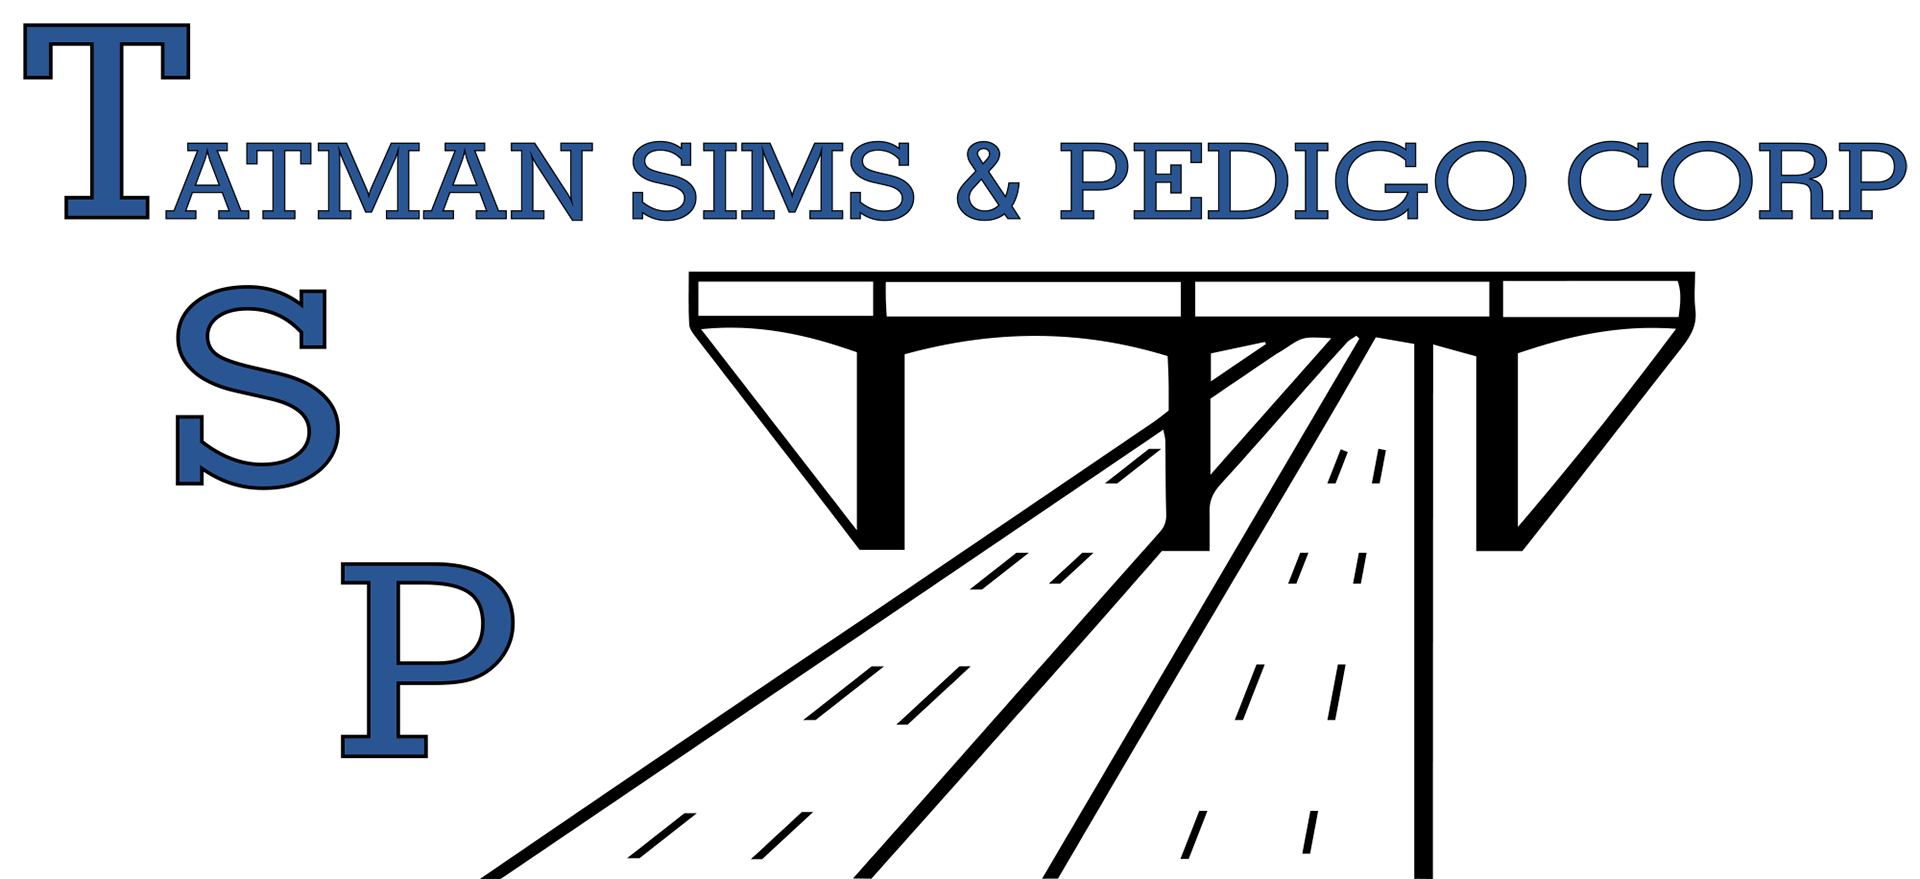 Tatman Sims & Pedigo Corp - Logo